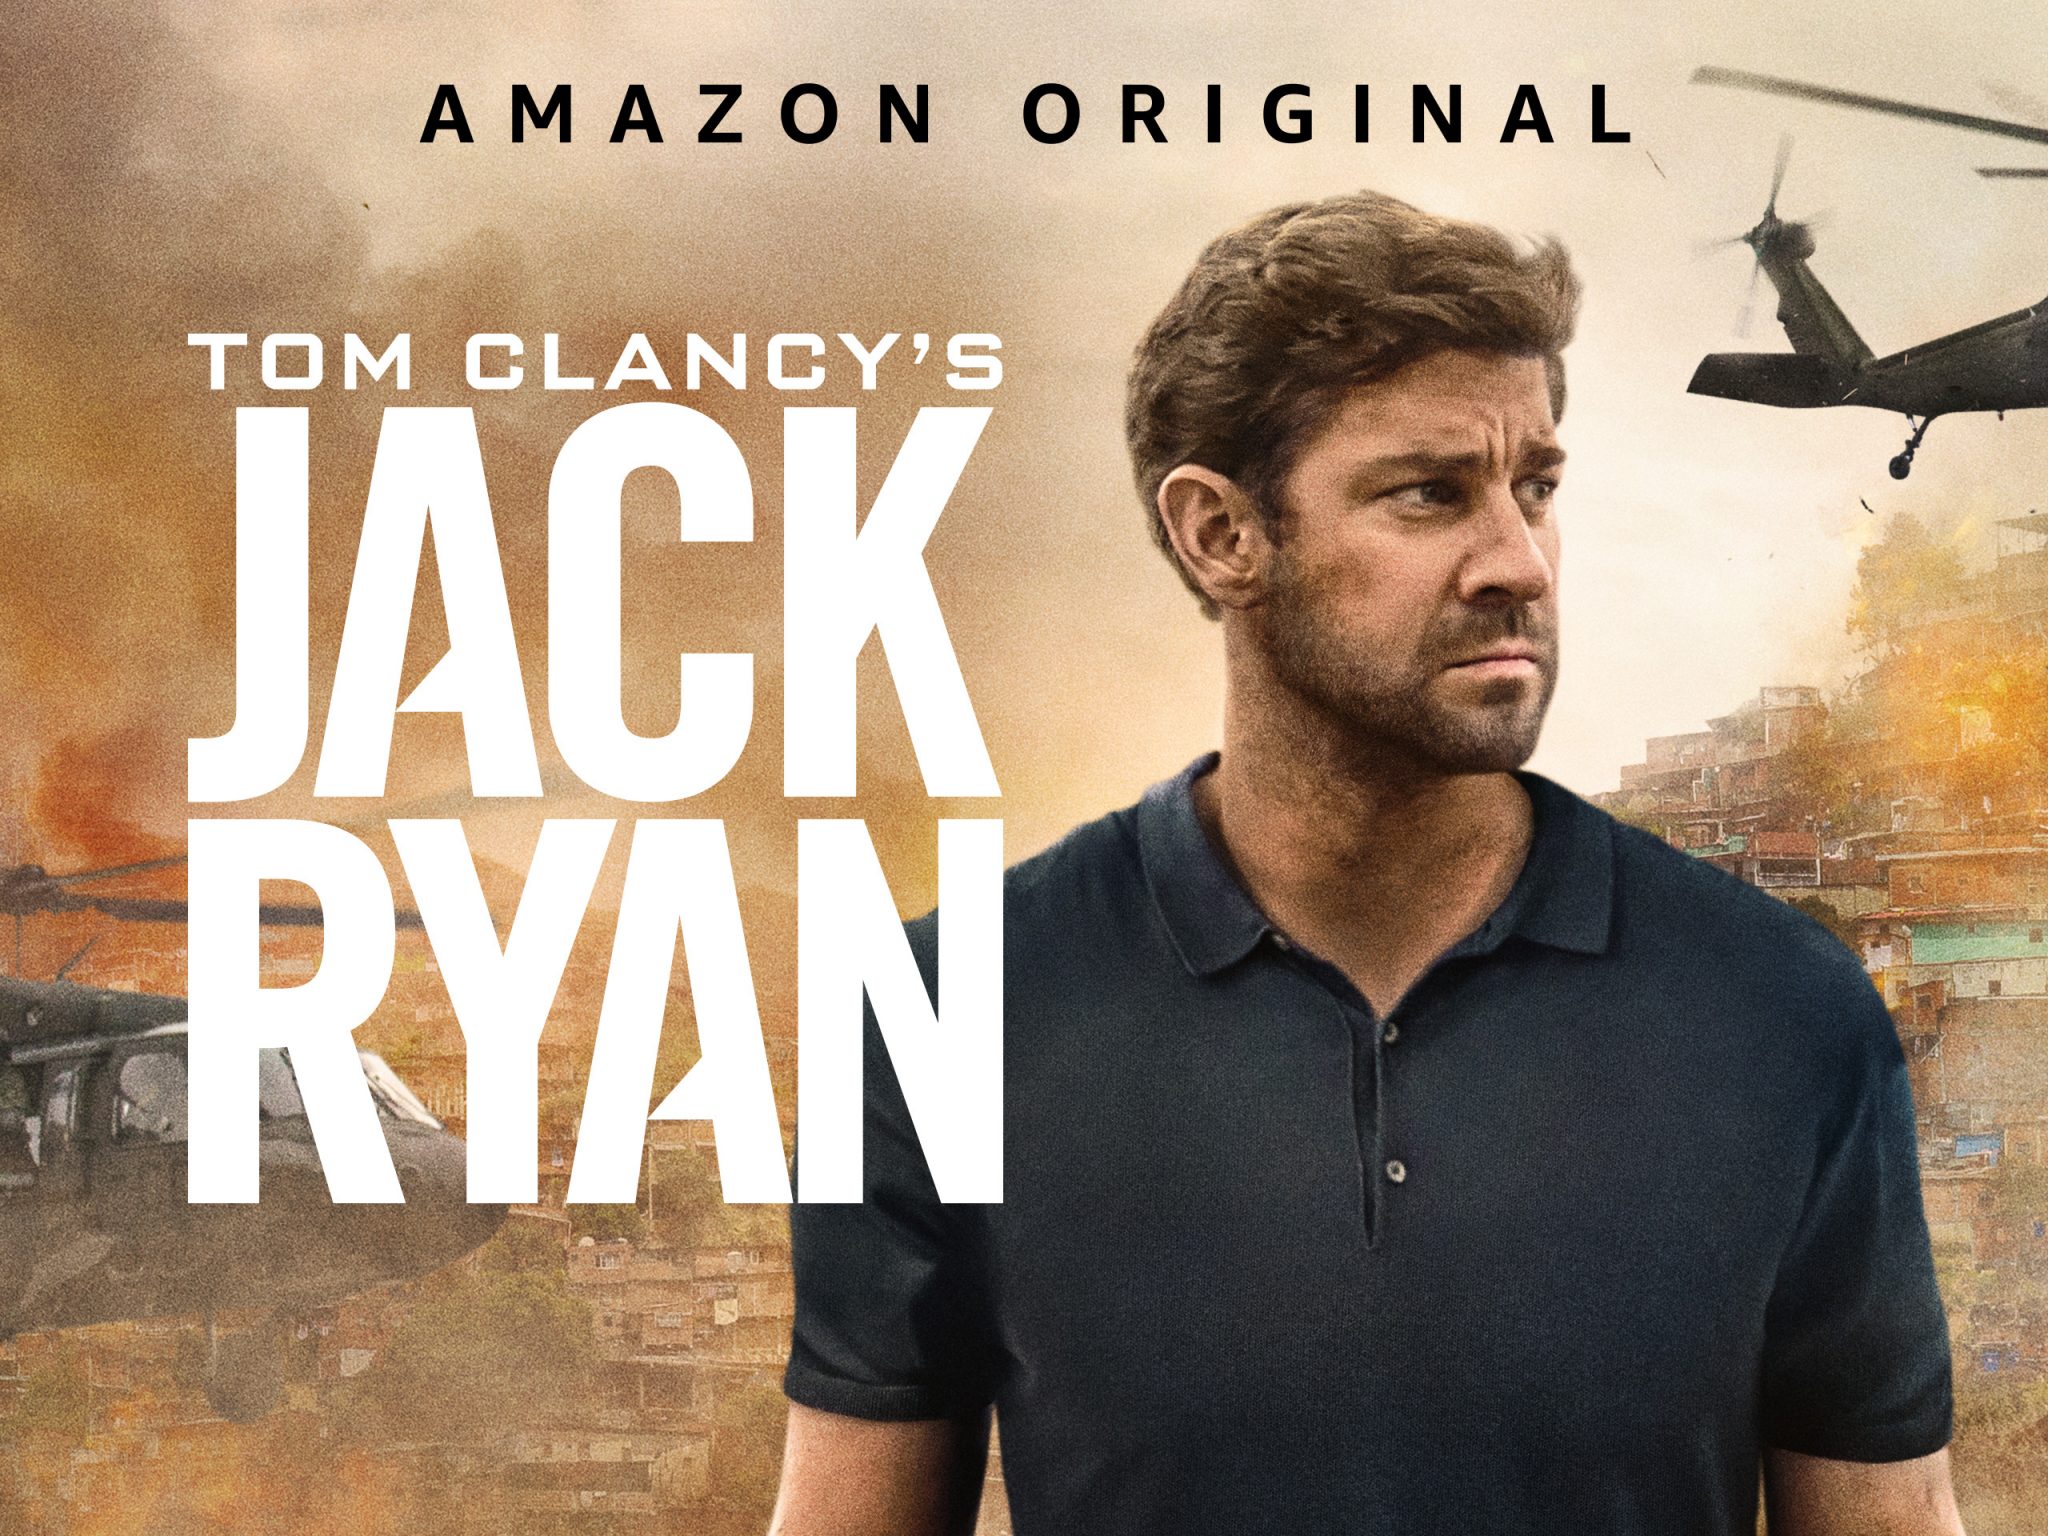 [Spoilers] Jack Ryan Season 3 Official Release Date, Cast, Plot, What